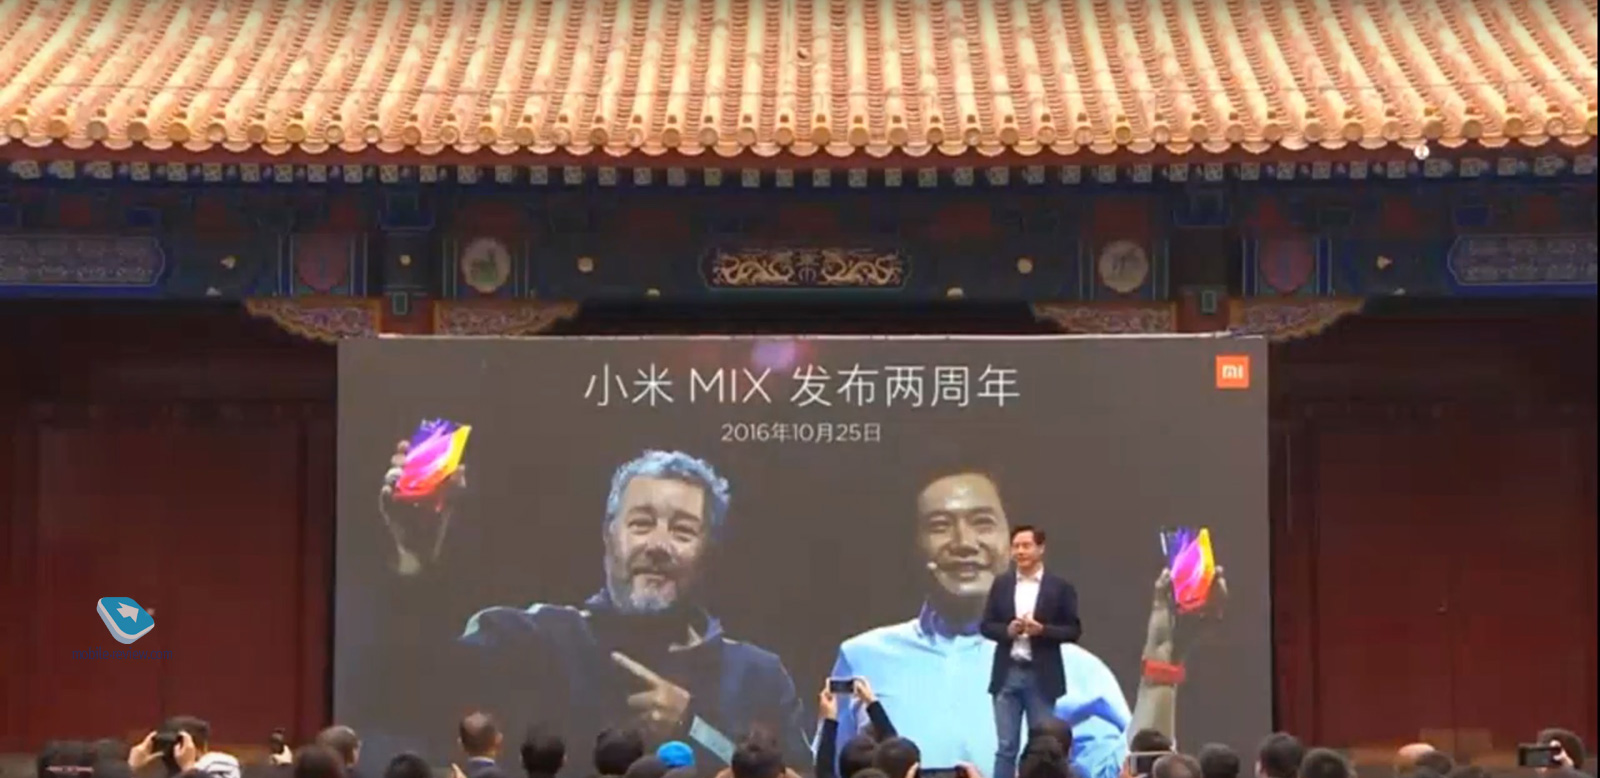  Xiaomi Mi Mix 3